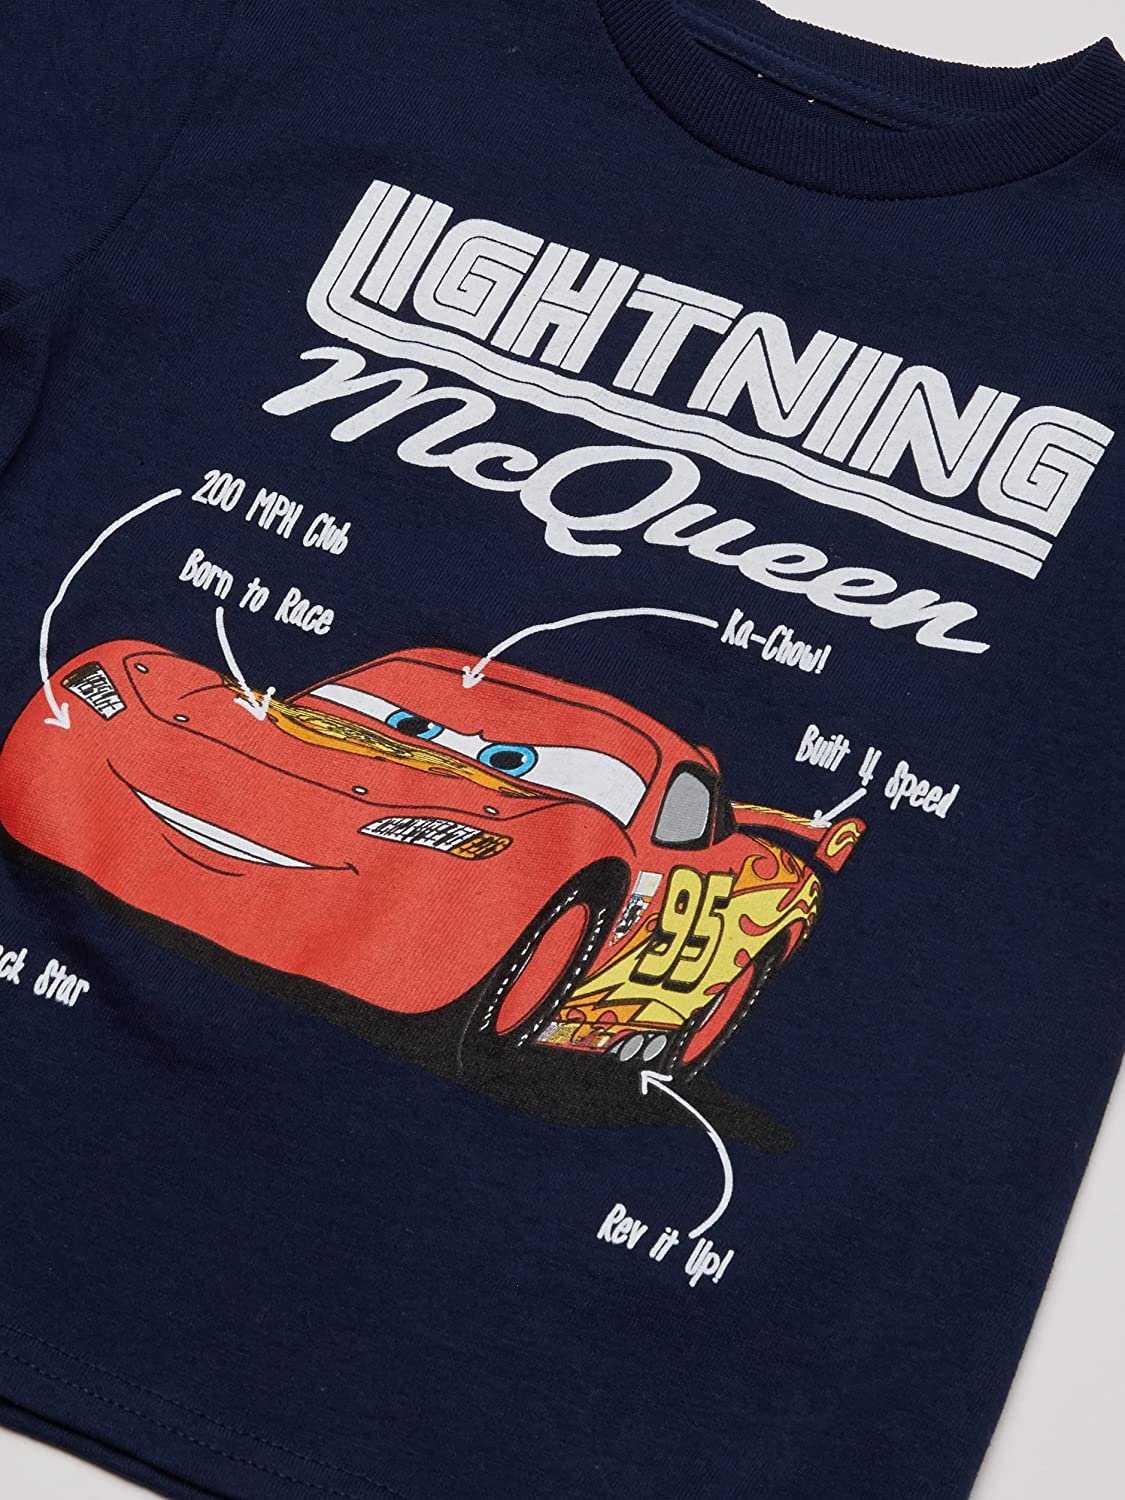 Disney Toddler Boys' Lightning Mcqueen Short Sleeve T-Shirt